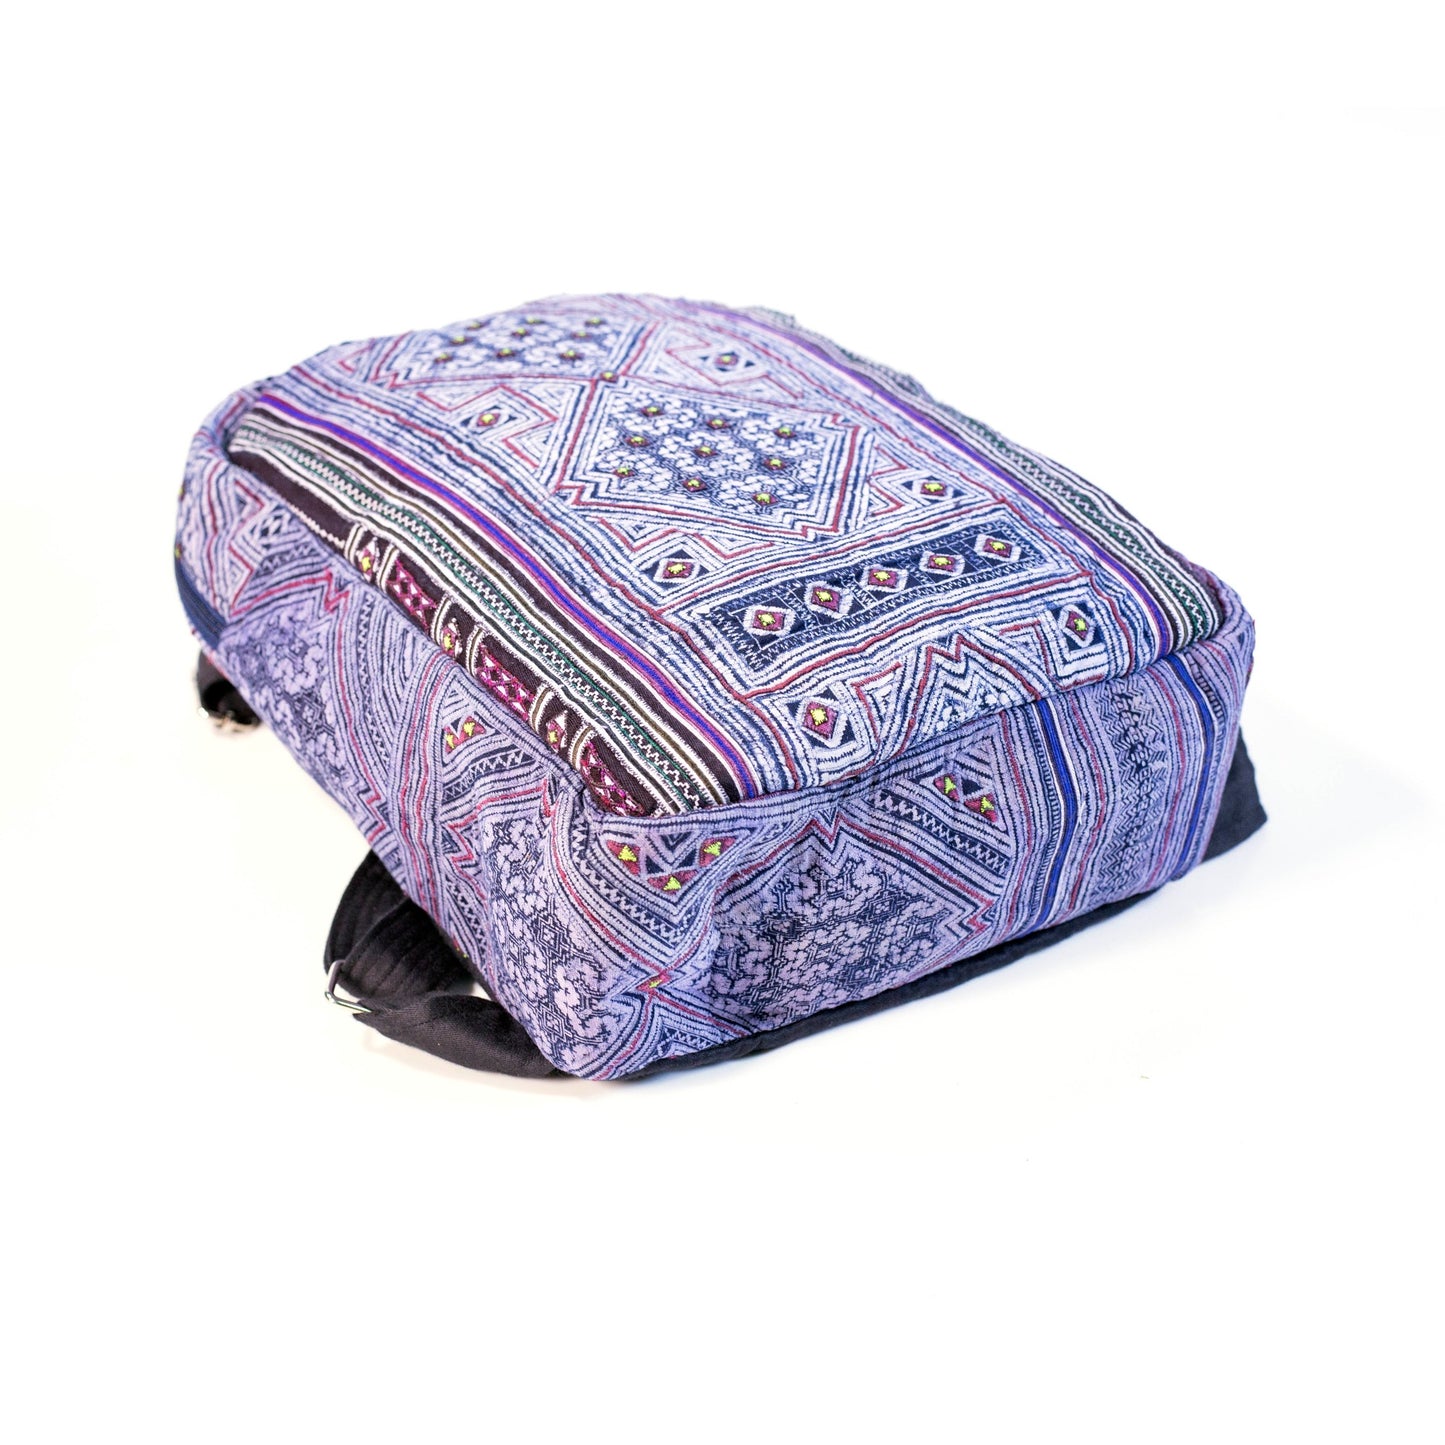 Batik backpack, medium size in a unique design, tribal pattern